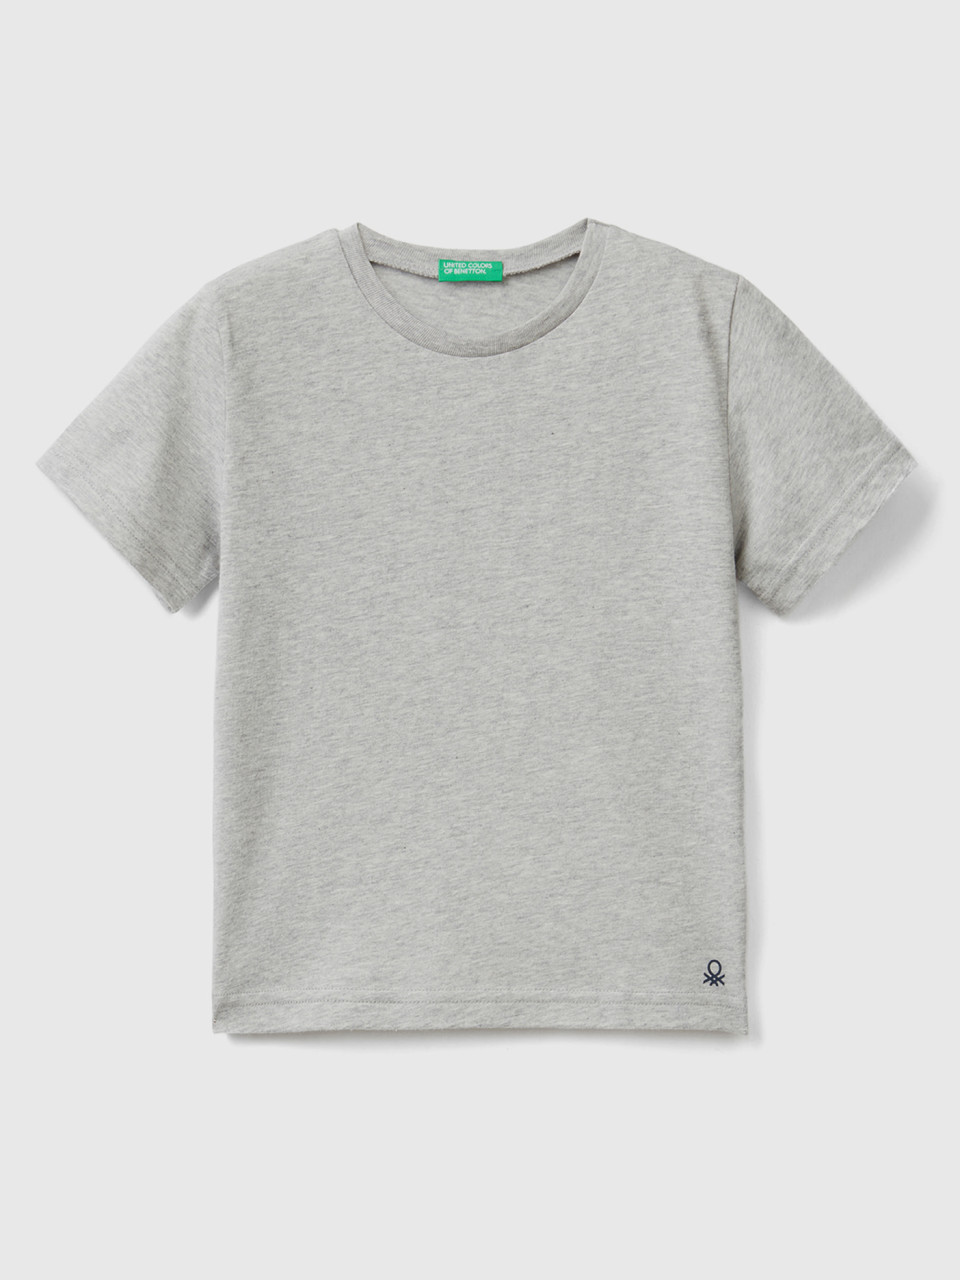 Benetton, T-shirt In Organic Cotton, Light Gray, Kids